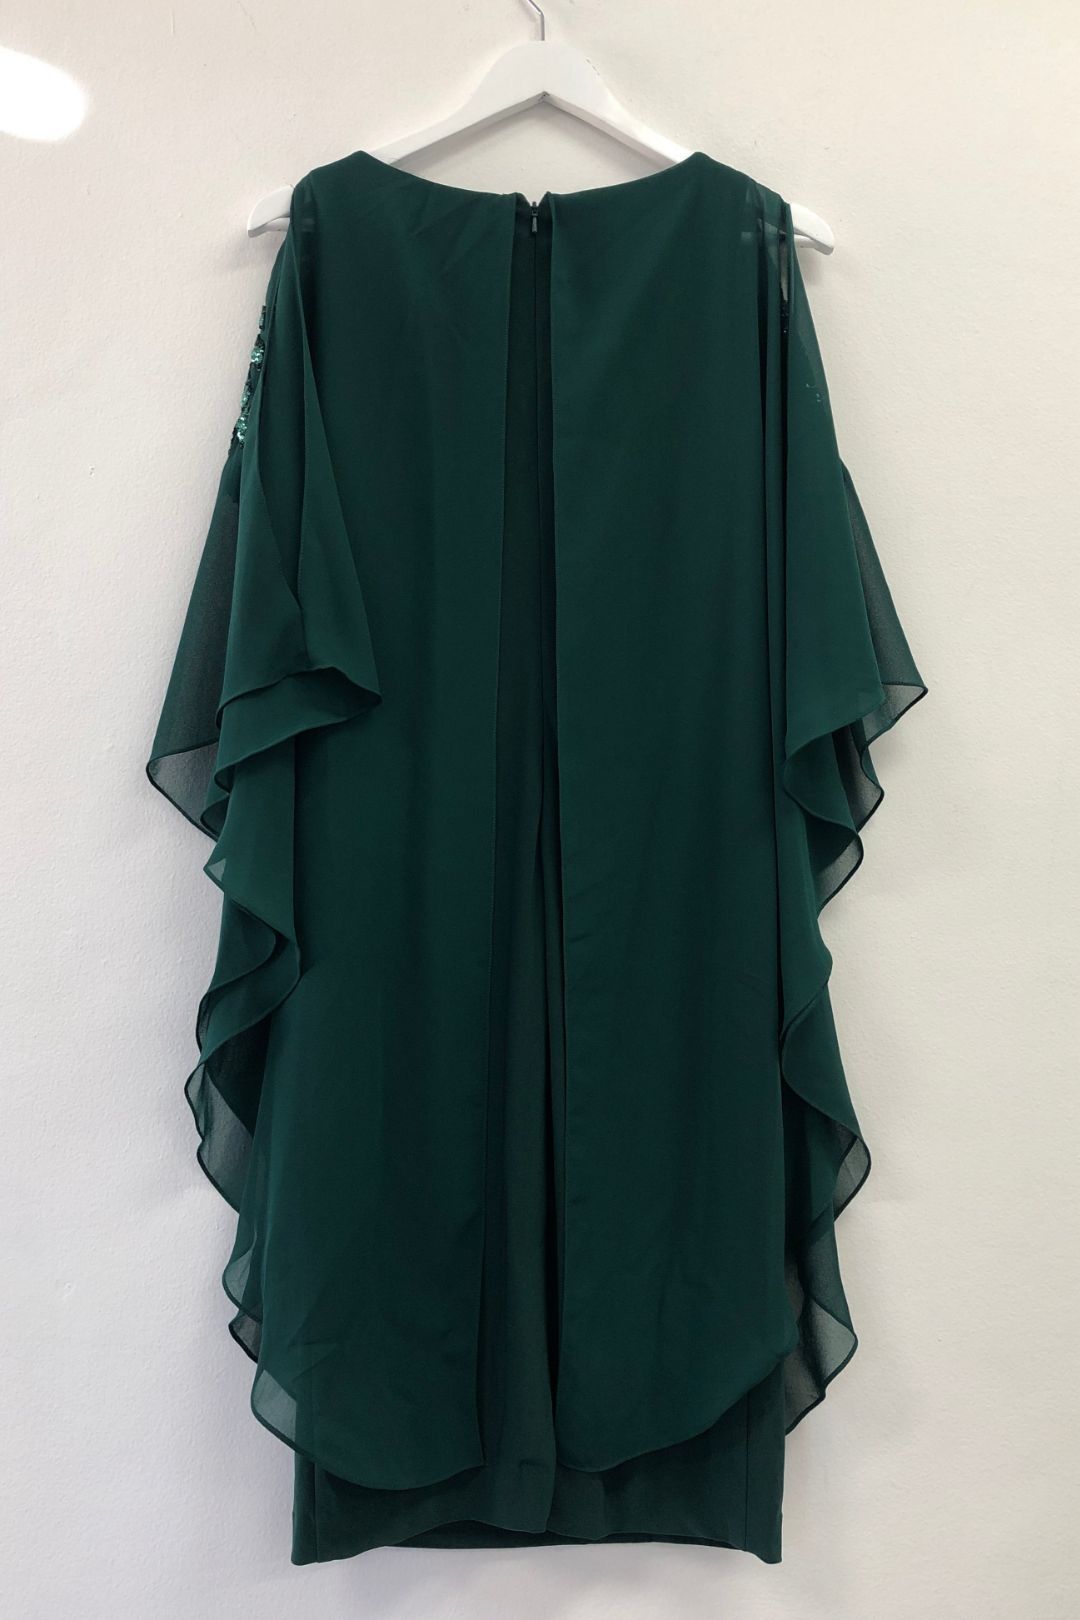 Montique	Celine Emerald Chiffon Overlay Dress